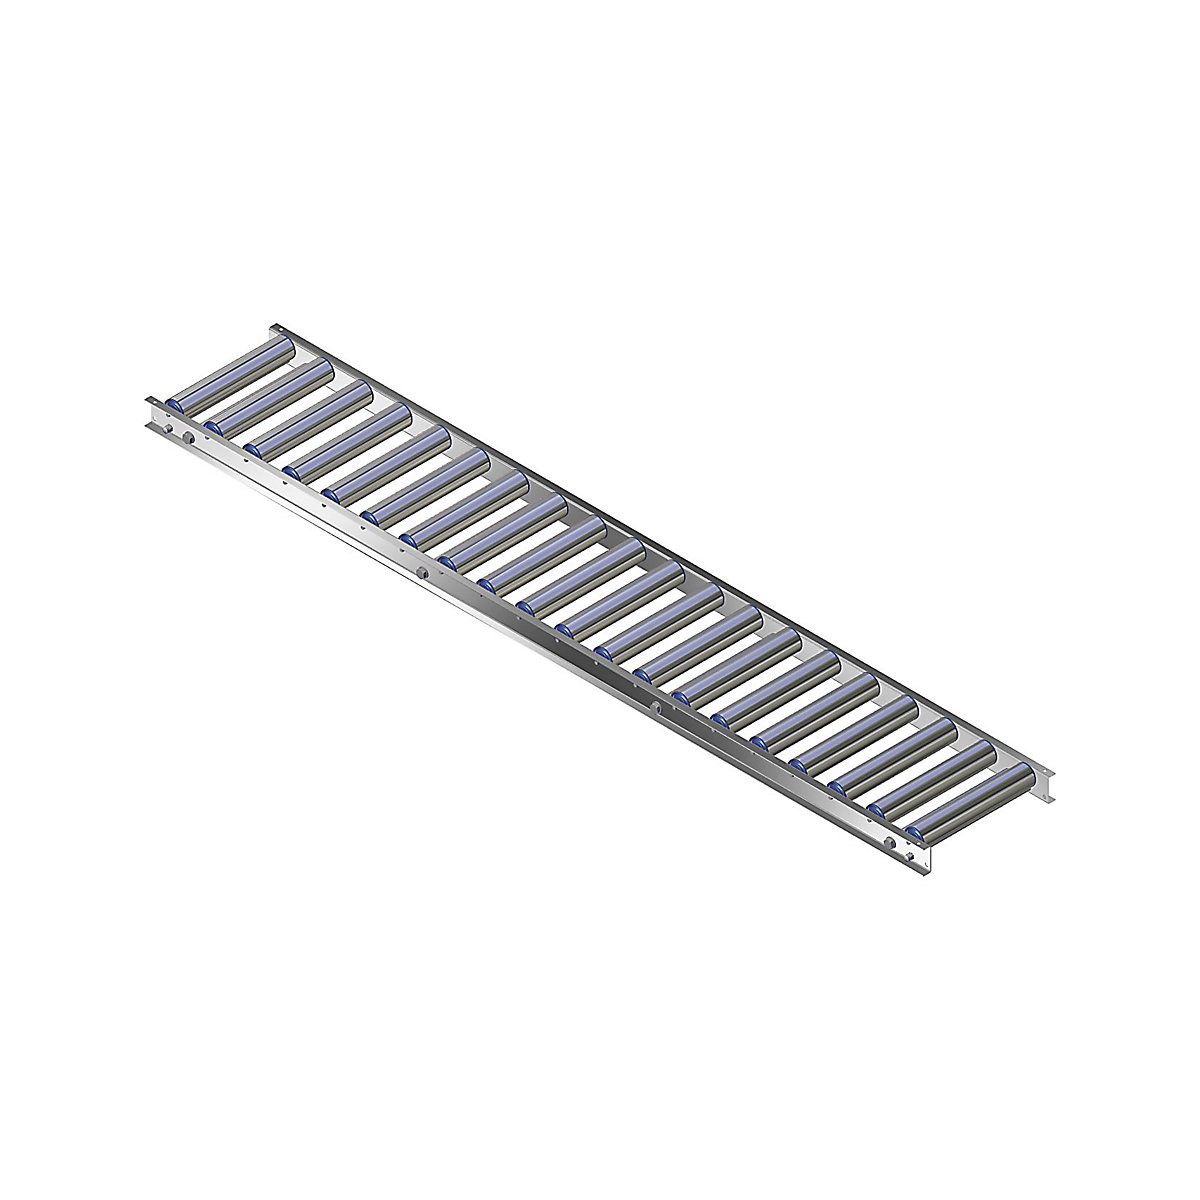 Gura – Light duty roller conveyor, aluminium frame with aluminium rollers, track width 300 mm, axle spacing 100 mm, length 2.0 m